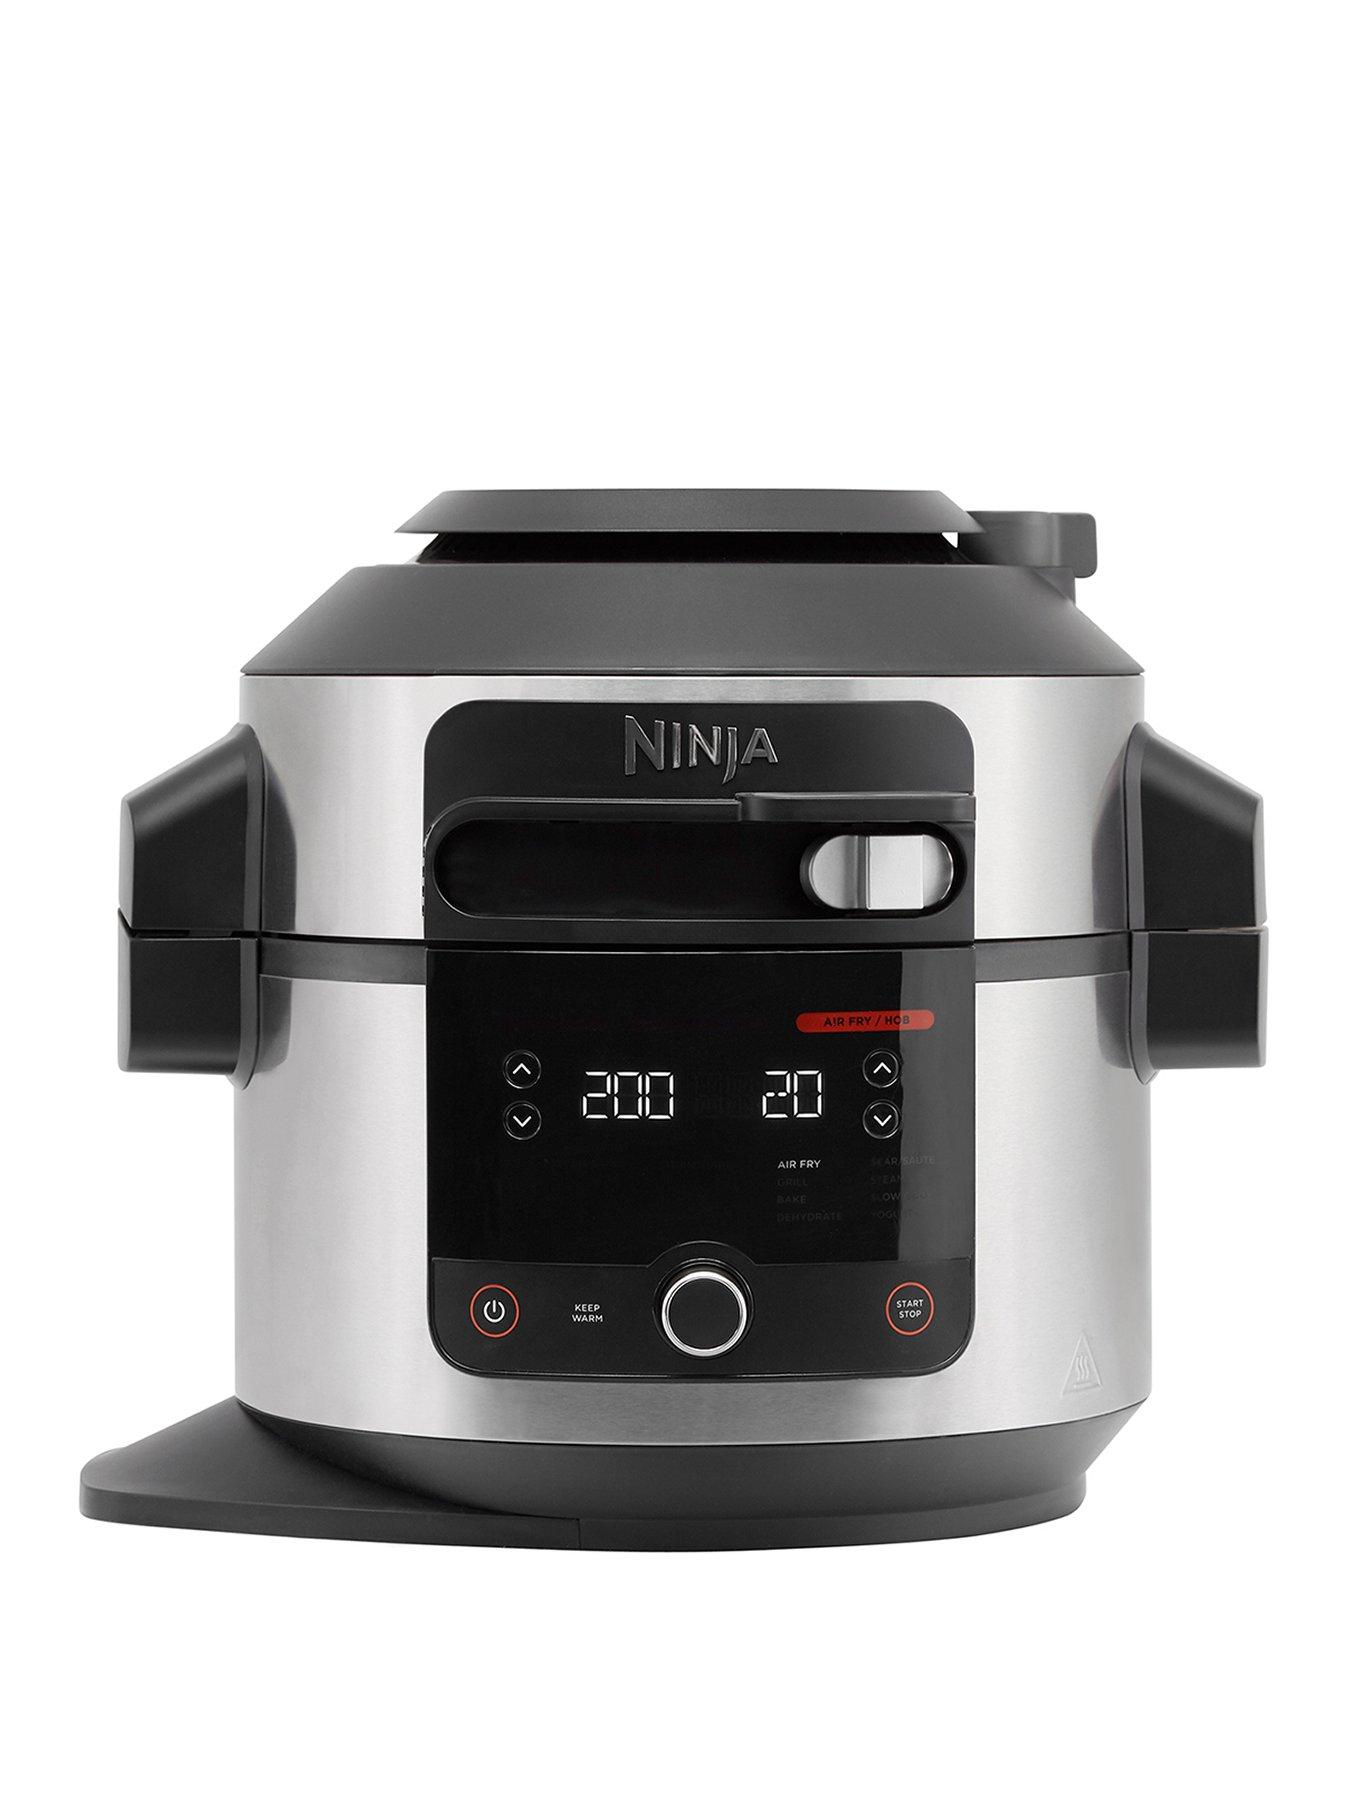 Ninja Foodi 10-in-1 Multifunction Oven DT200UK